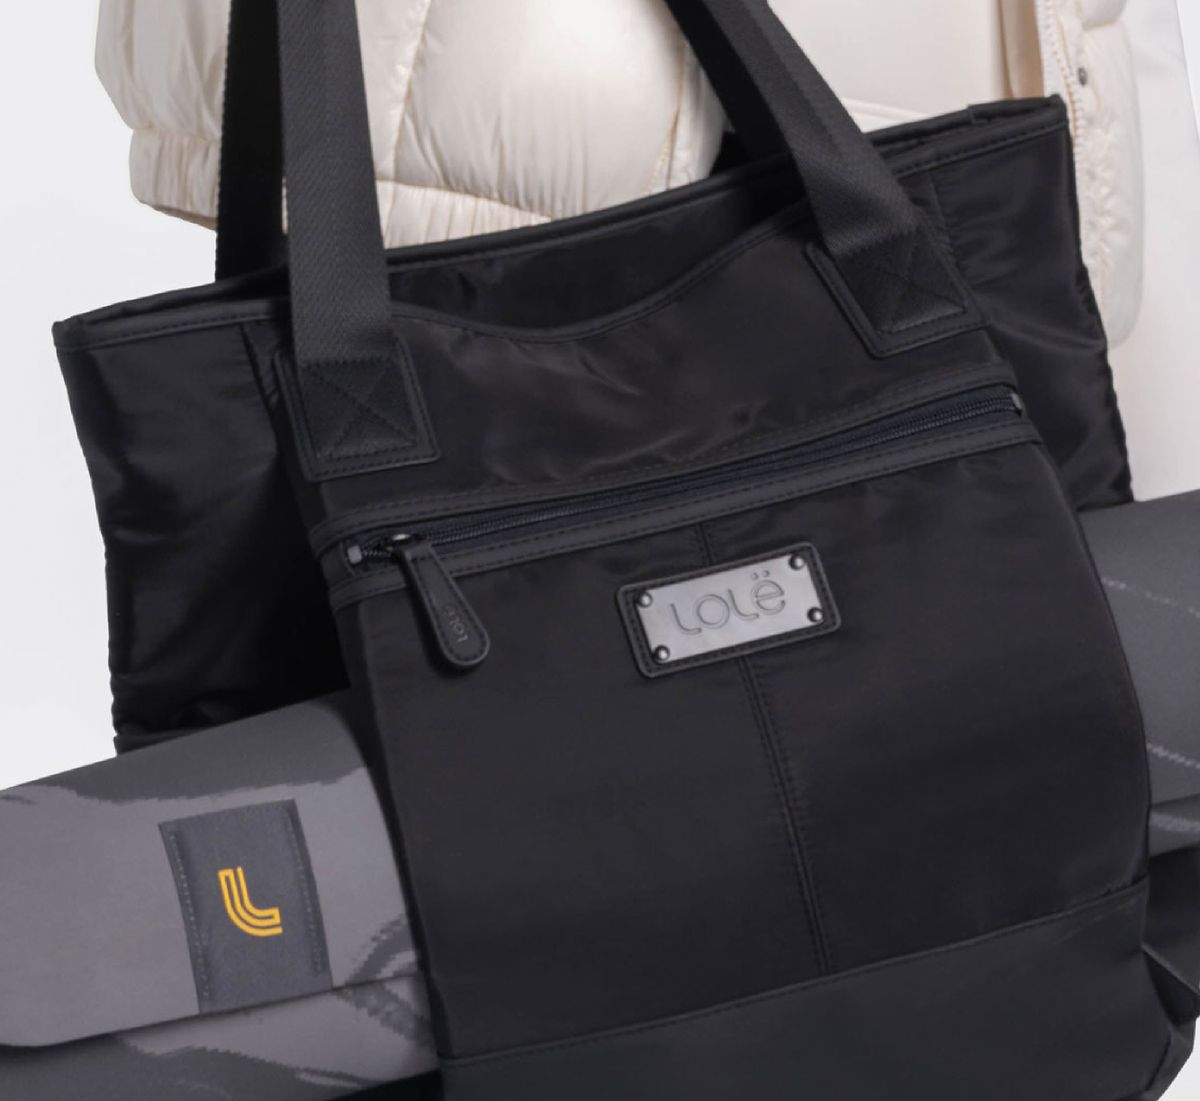 Yoga Tote Bag with Yoga Mat Pocket, Yoga Pilates Mat Bag, Organic